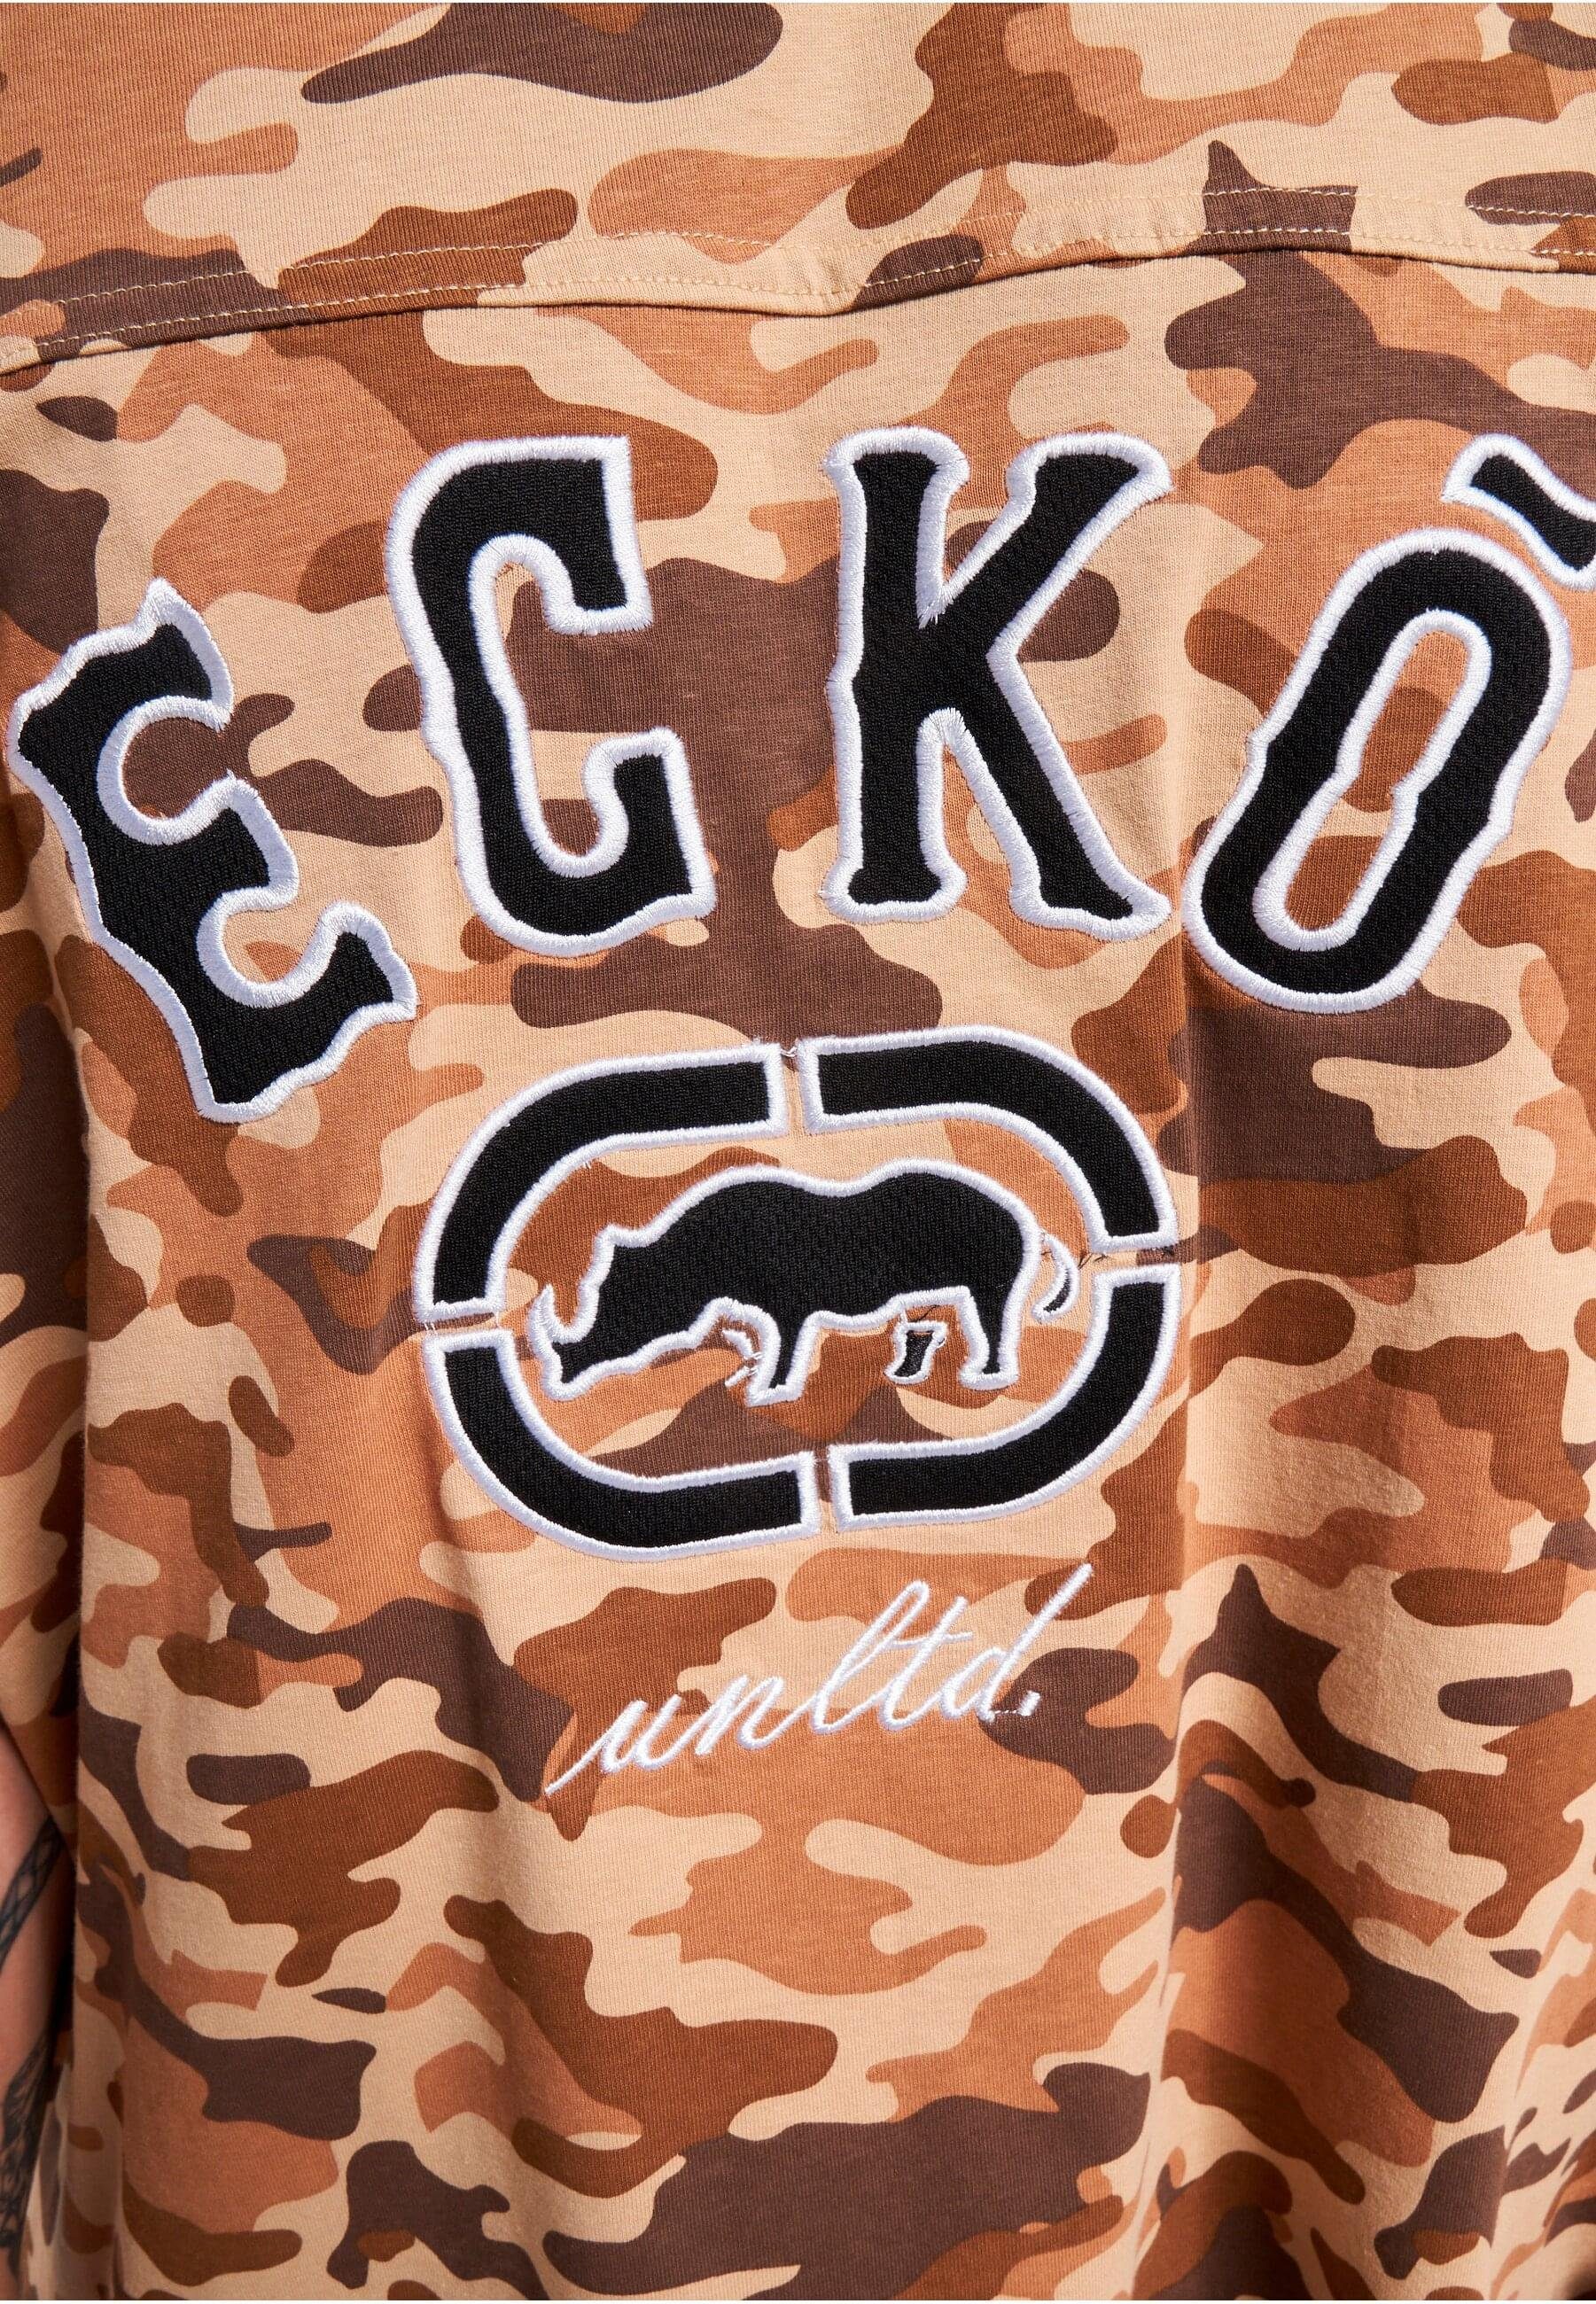 Unltd. (1-tlg) Tshirt BBall Ecko Herren camouflage/camel/brown Unltd. Ecko T-Shirt